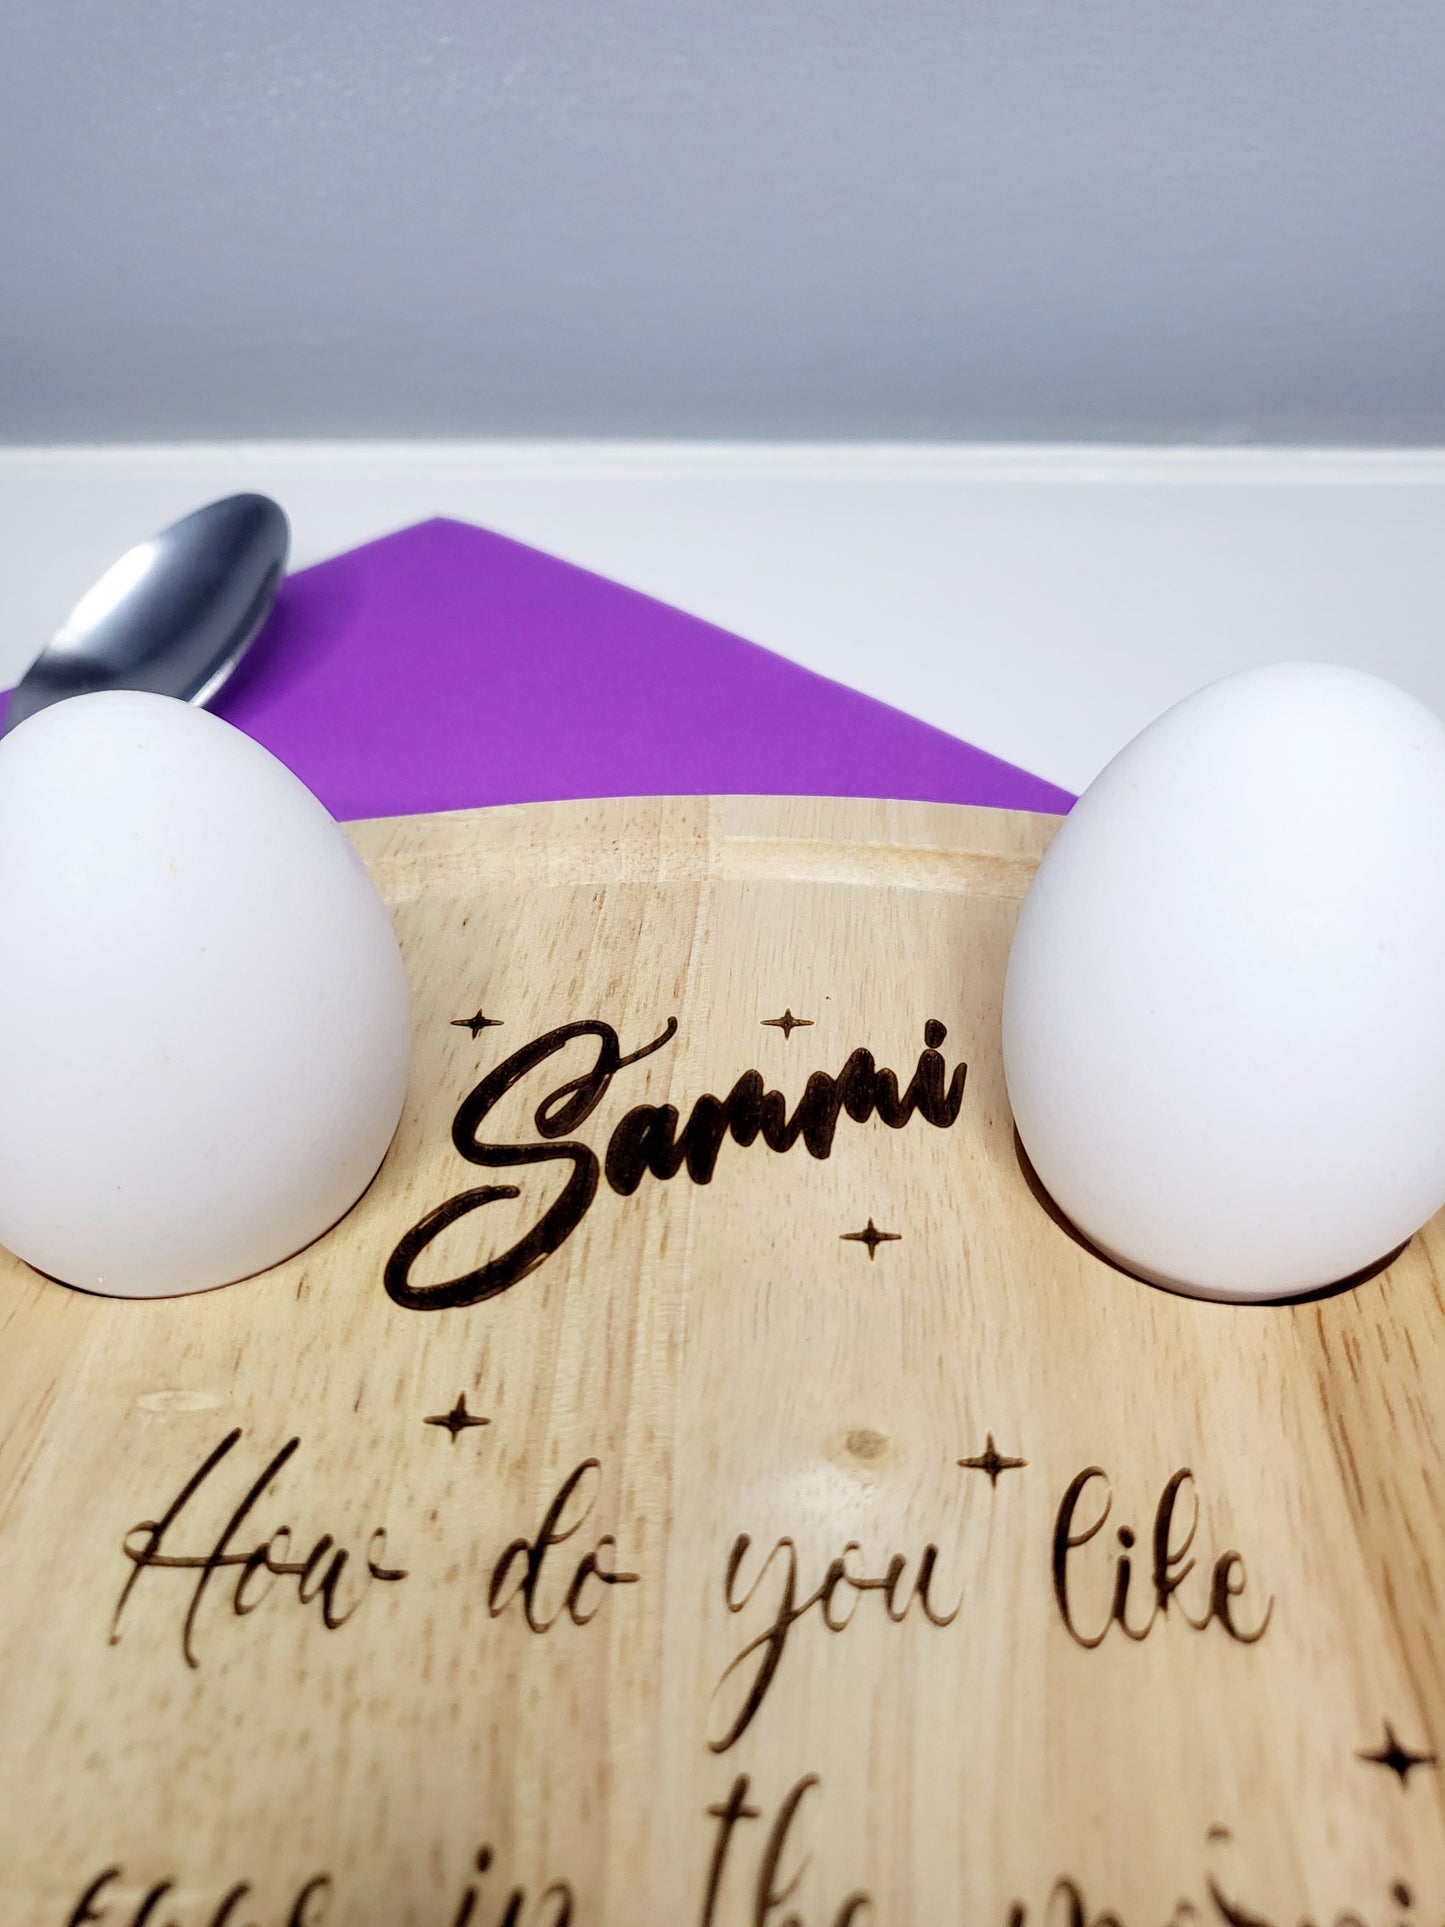 Personalised Egg Board, I Like Mine With A Kiss